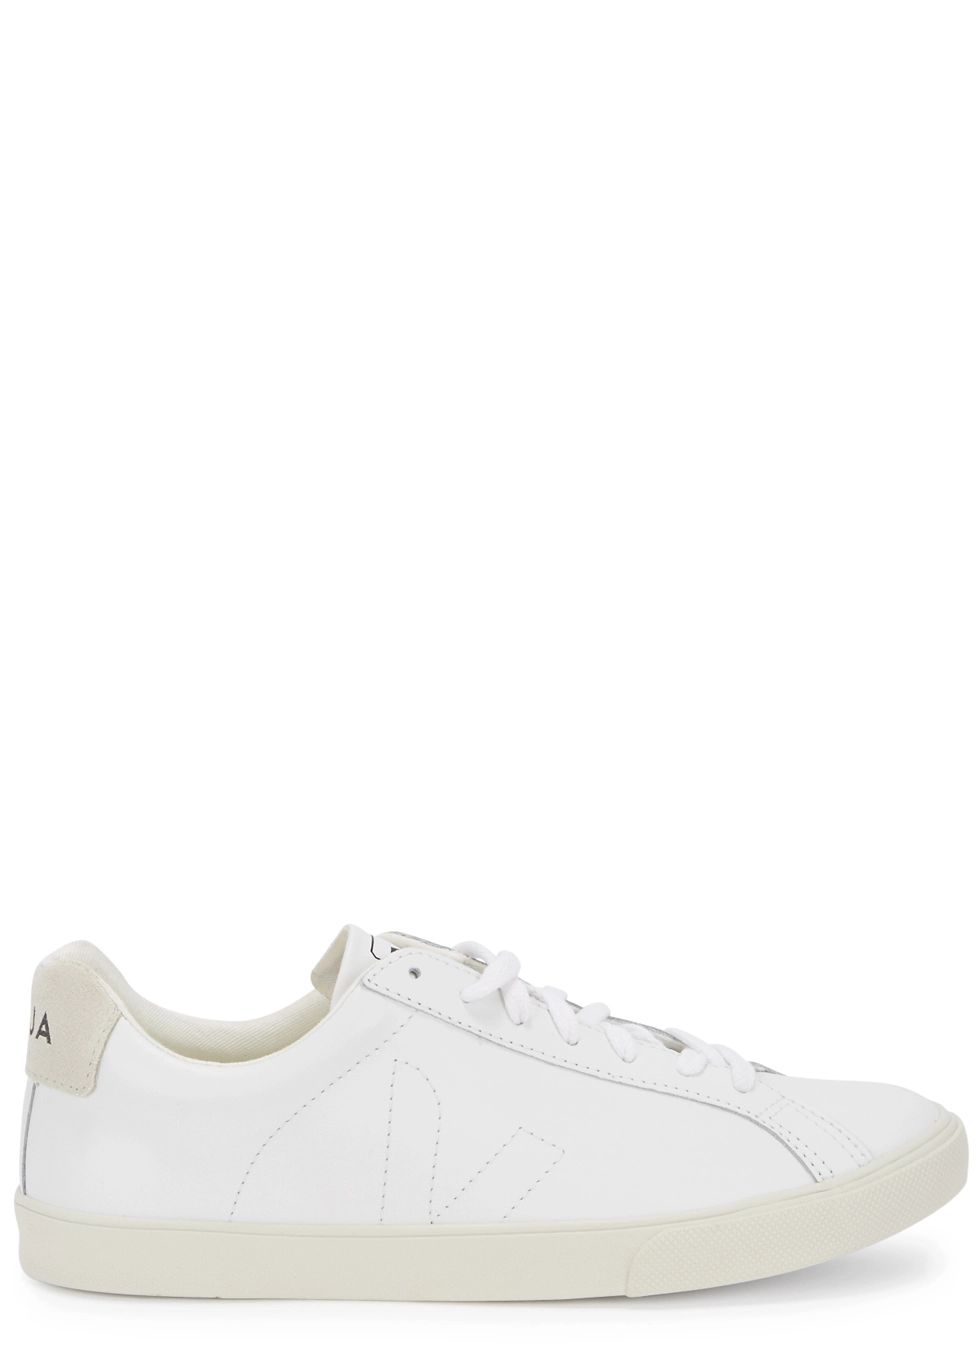 Esplar white leather sneakers | Harvey Nichols (Global)